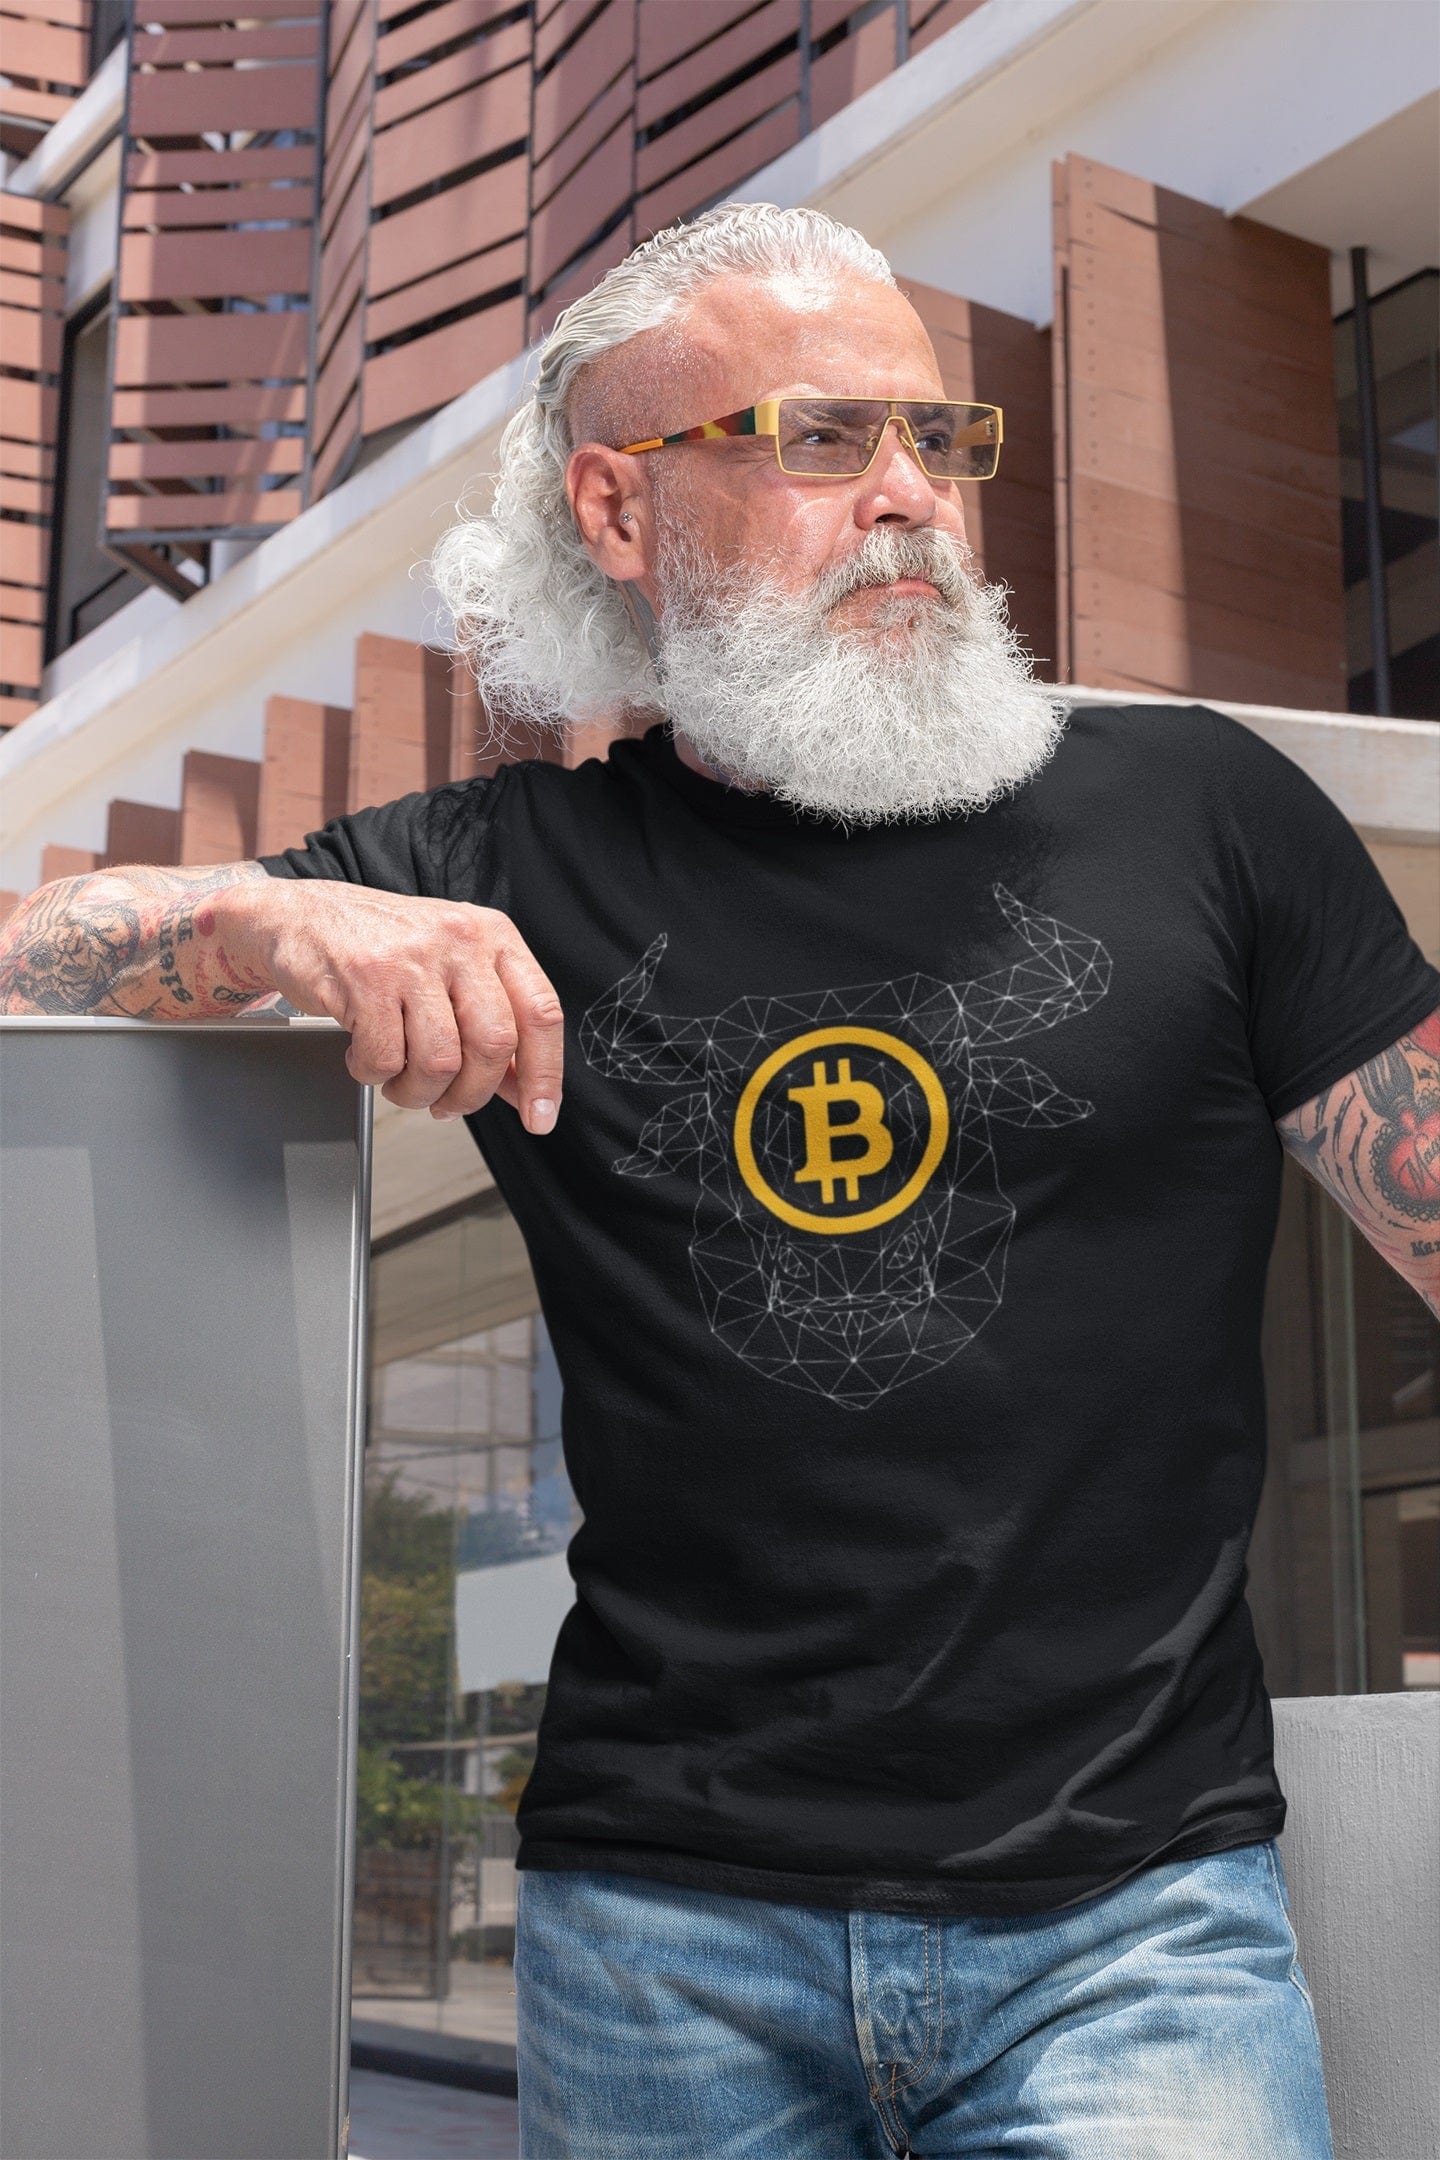 Men's Bitcoin T-shirt